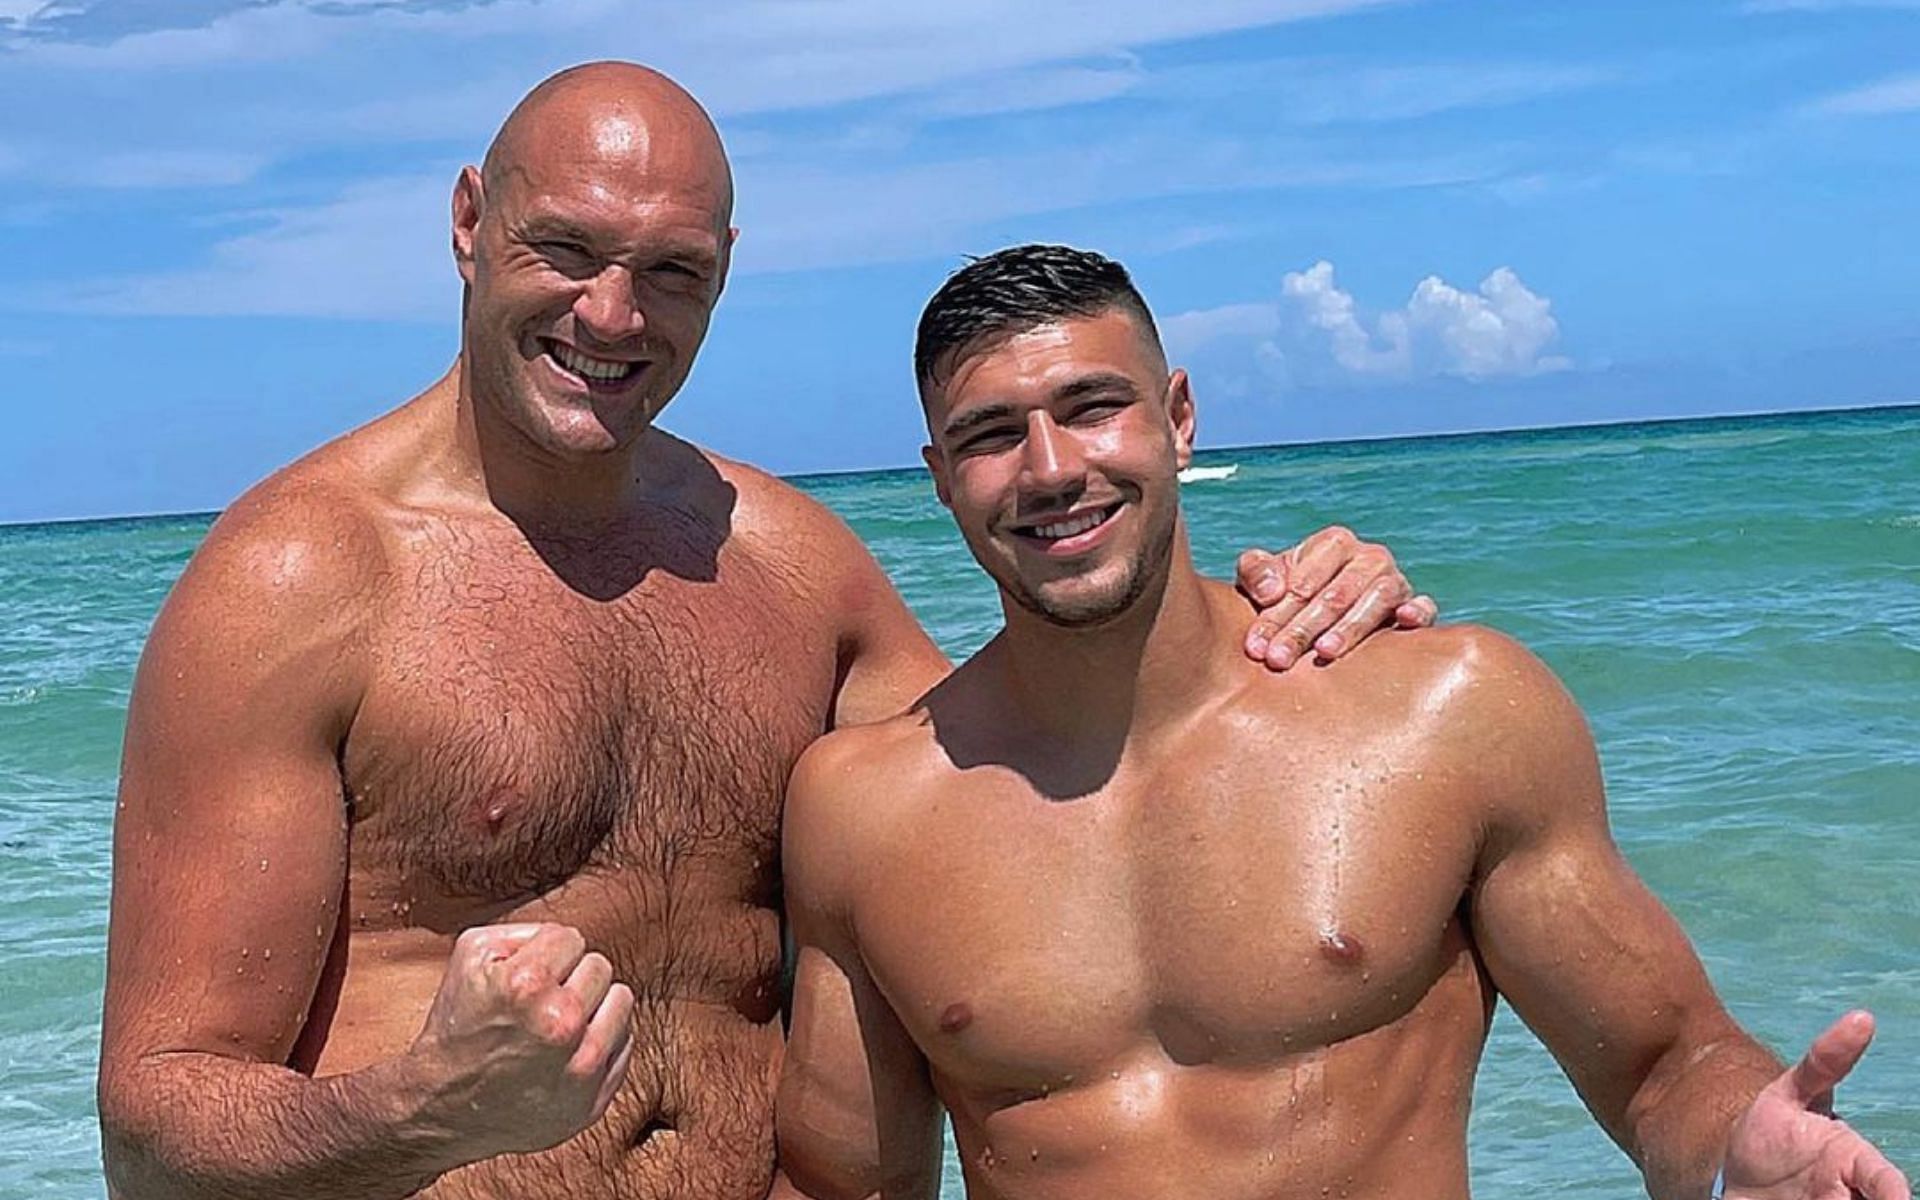 Tyson Fury (left) and Tommy Fury [Image Courtesy: @tommyfury on Instagram]